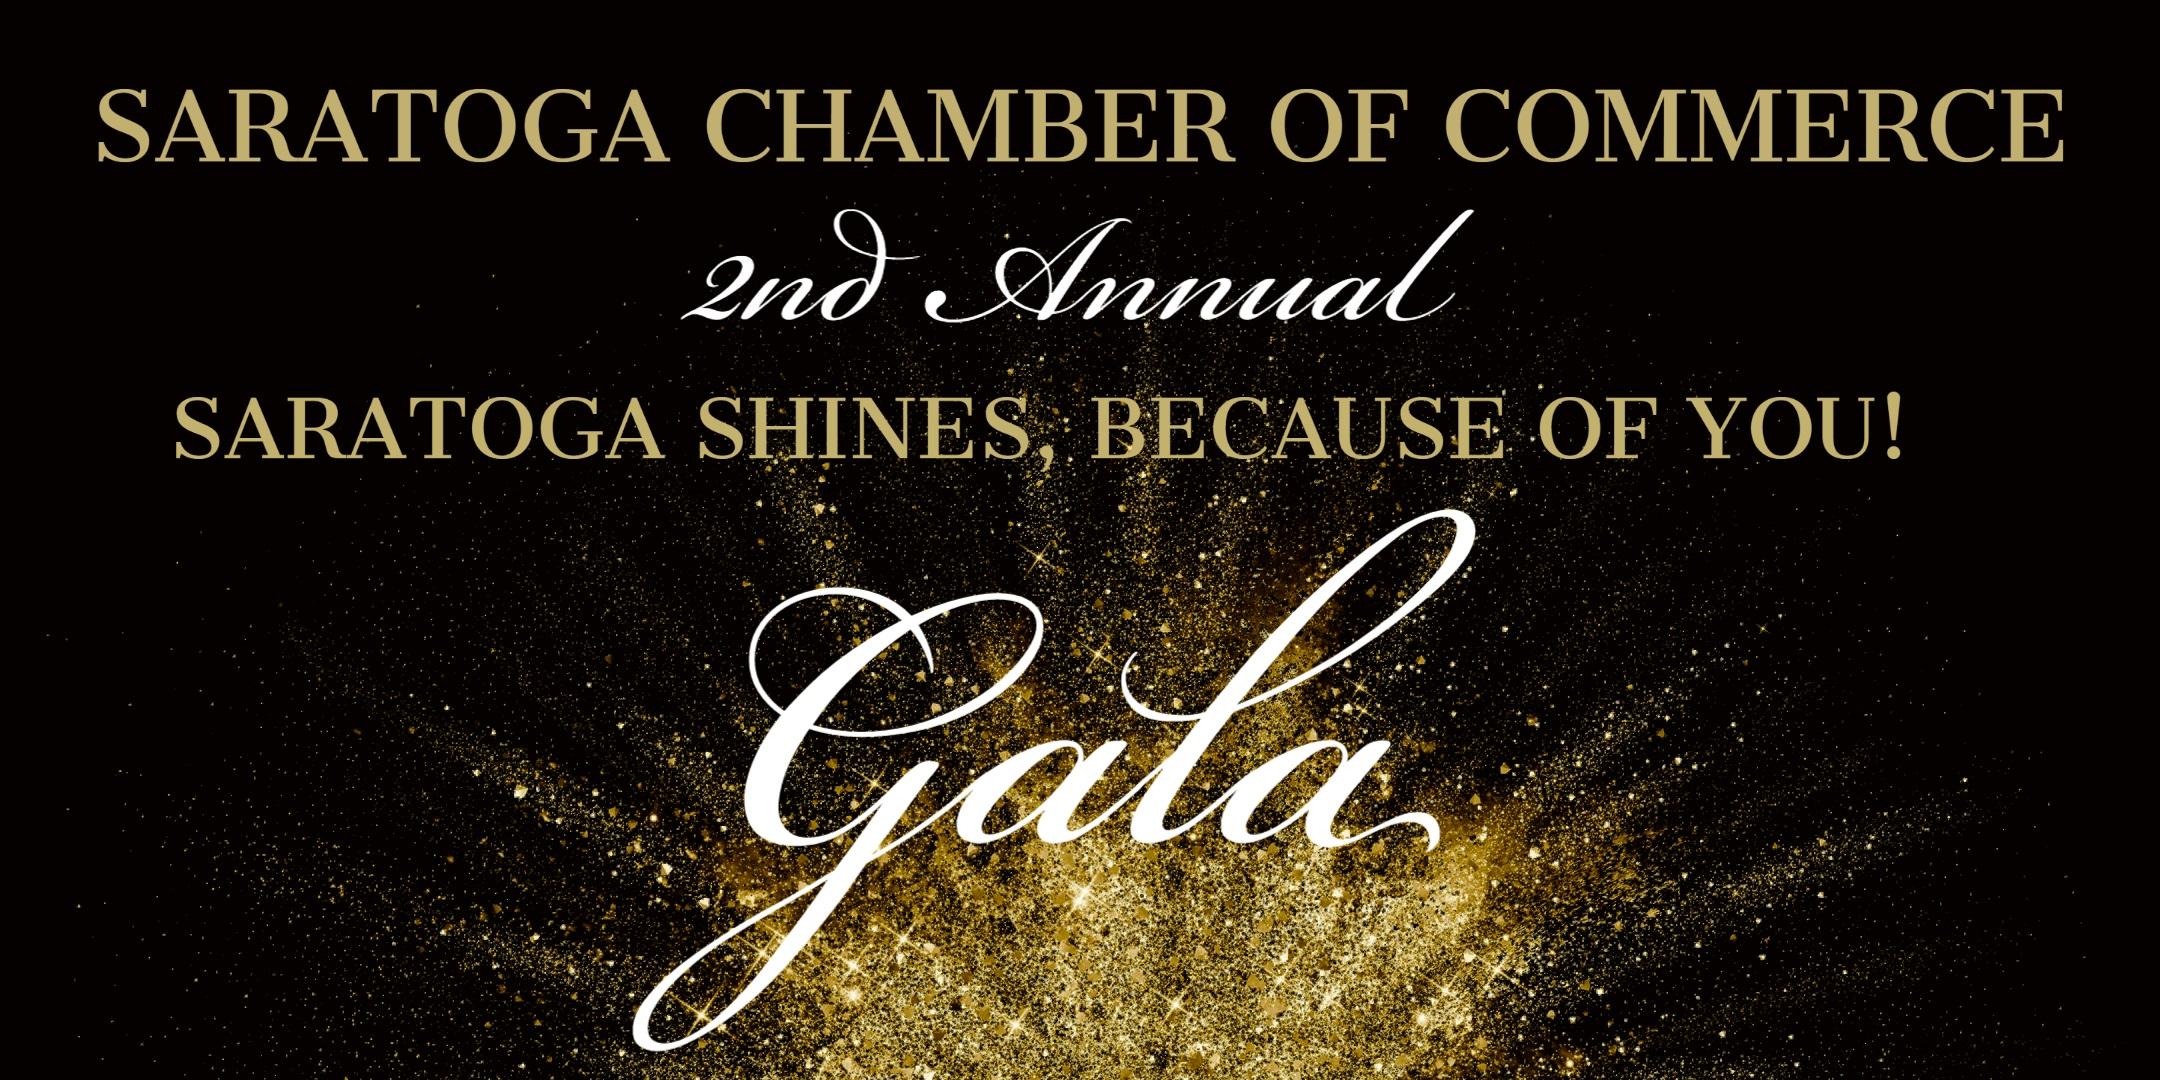 2nd Annual Saratoga Shines, Because of You! Gala